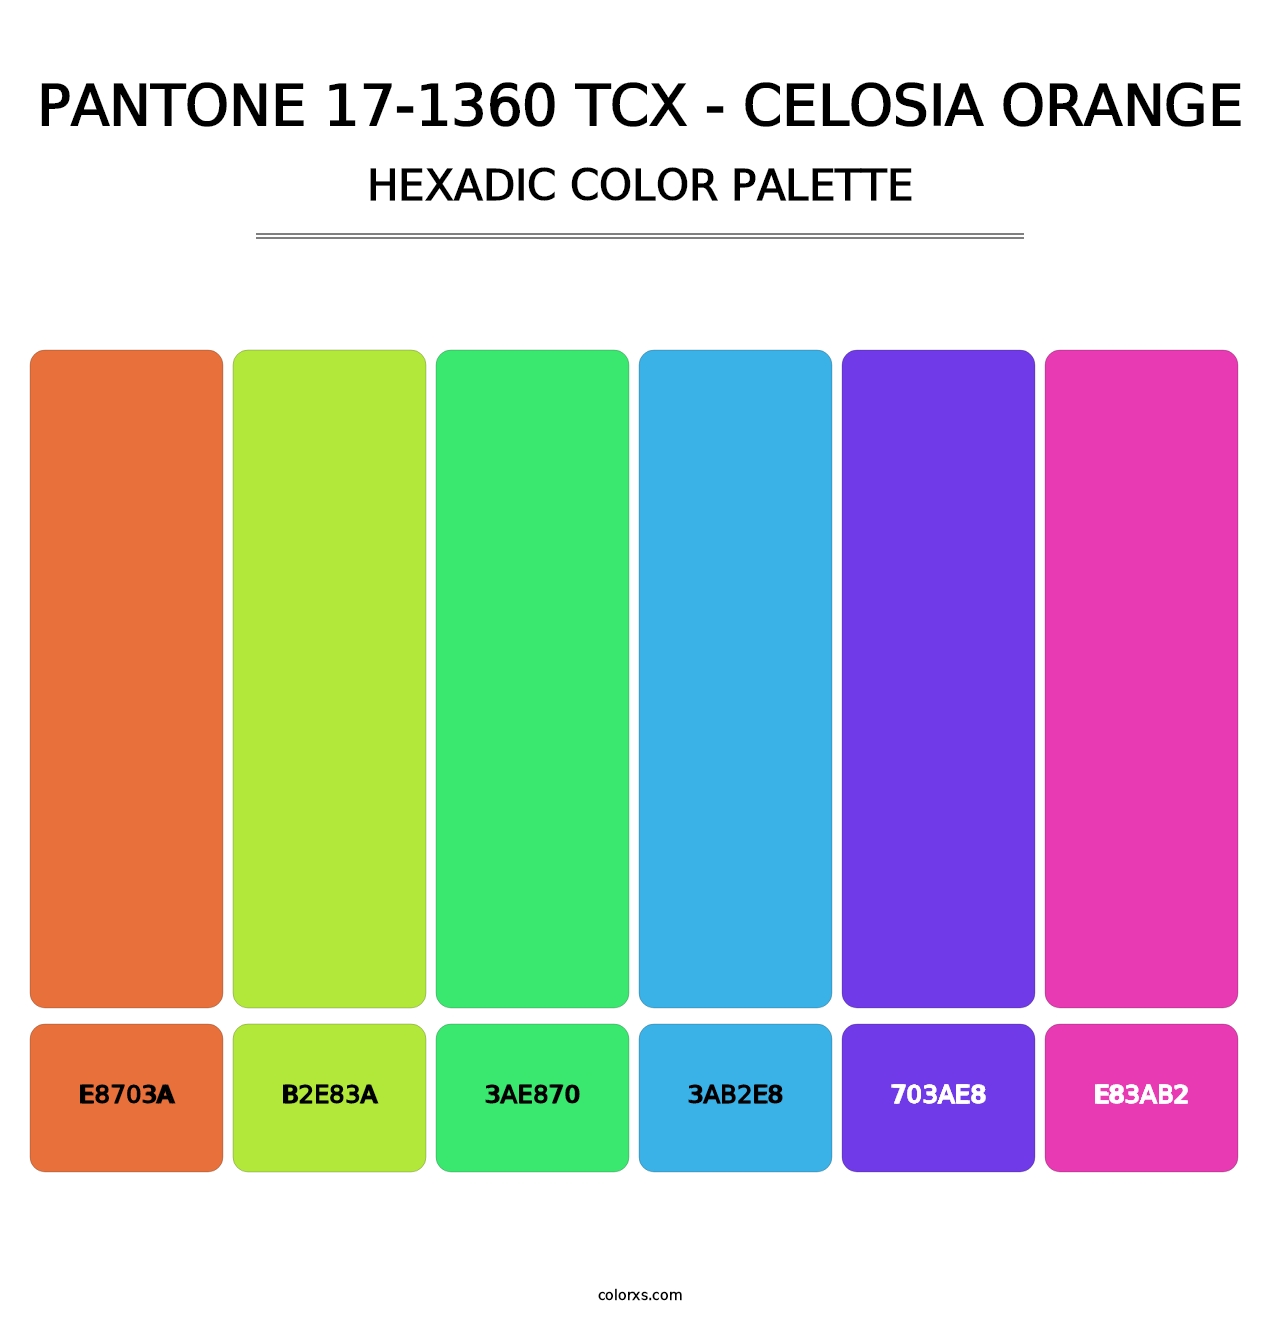 PANTONE 17-1360 TCX - Celosia Orange - Hexadic Color Palette